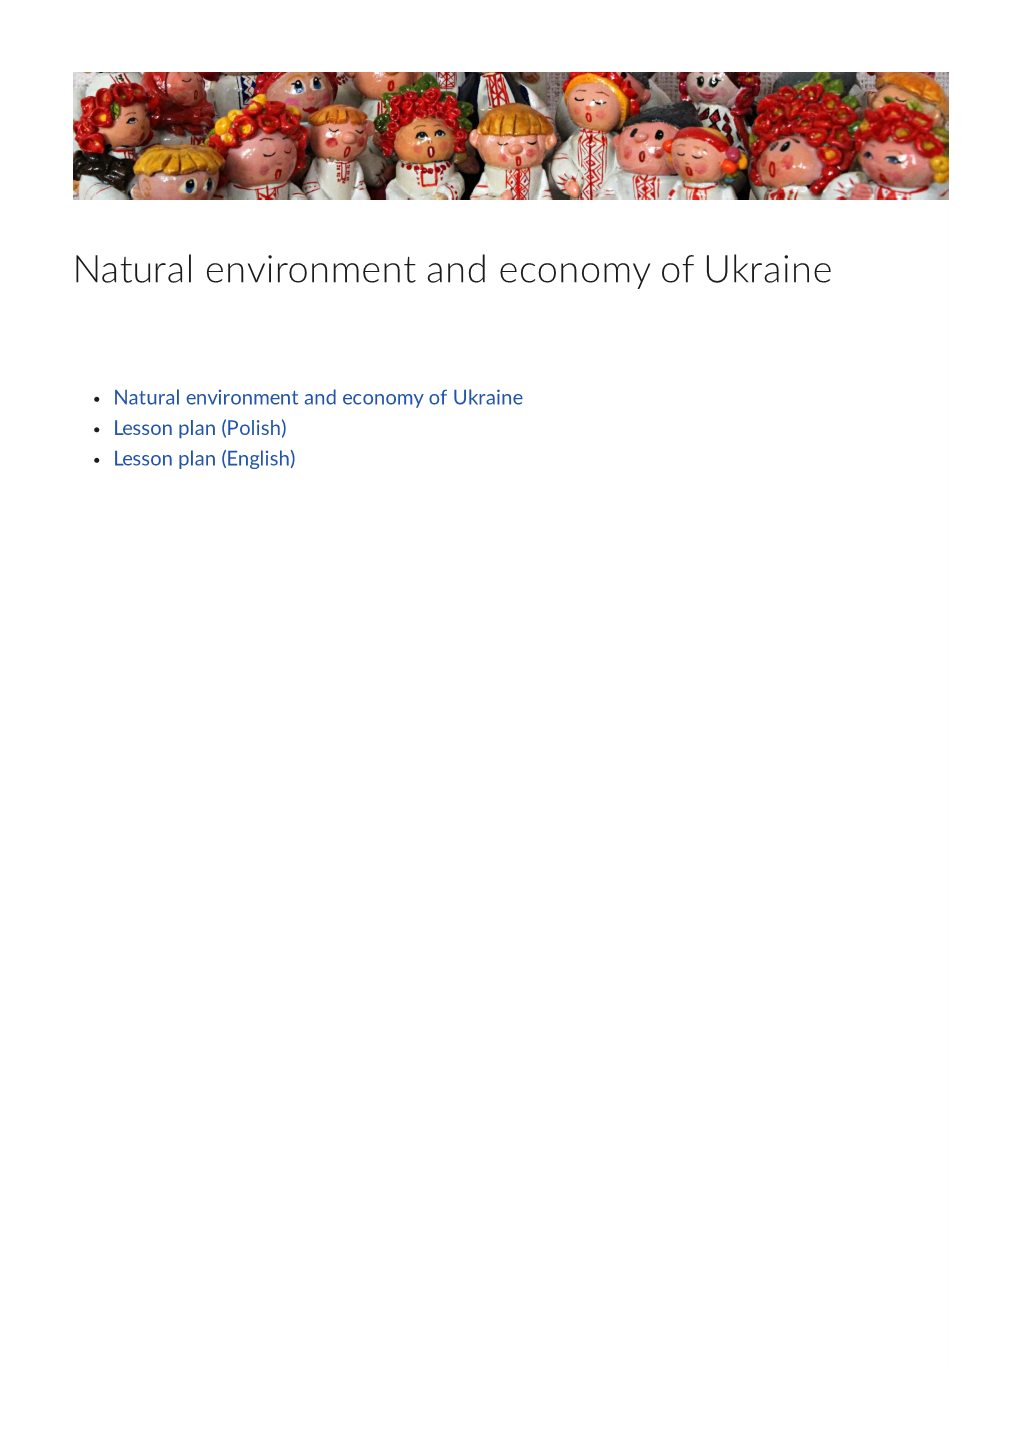 Natural Environment and Economy of Ukraine